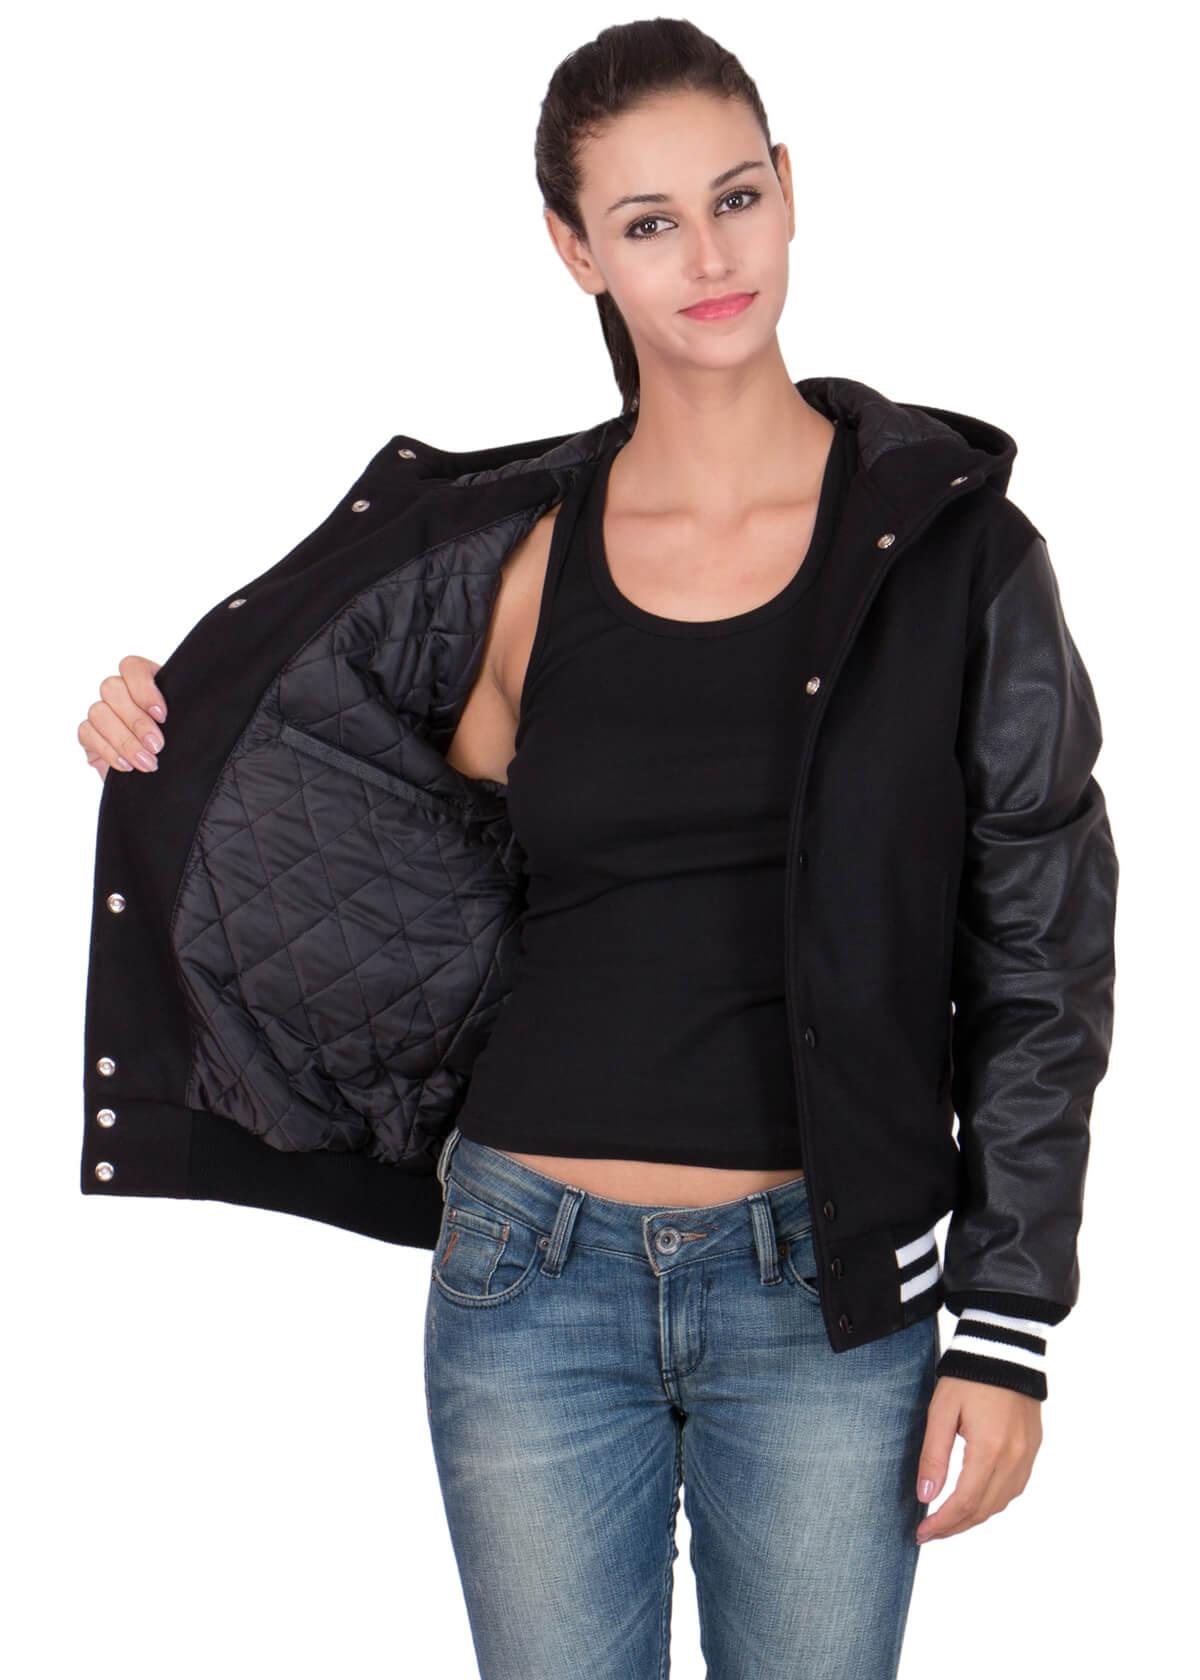 Womens Black Hood Varsity Jacket With Leather Sleeves-7